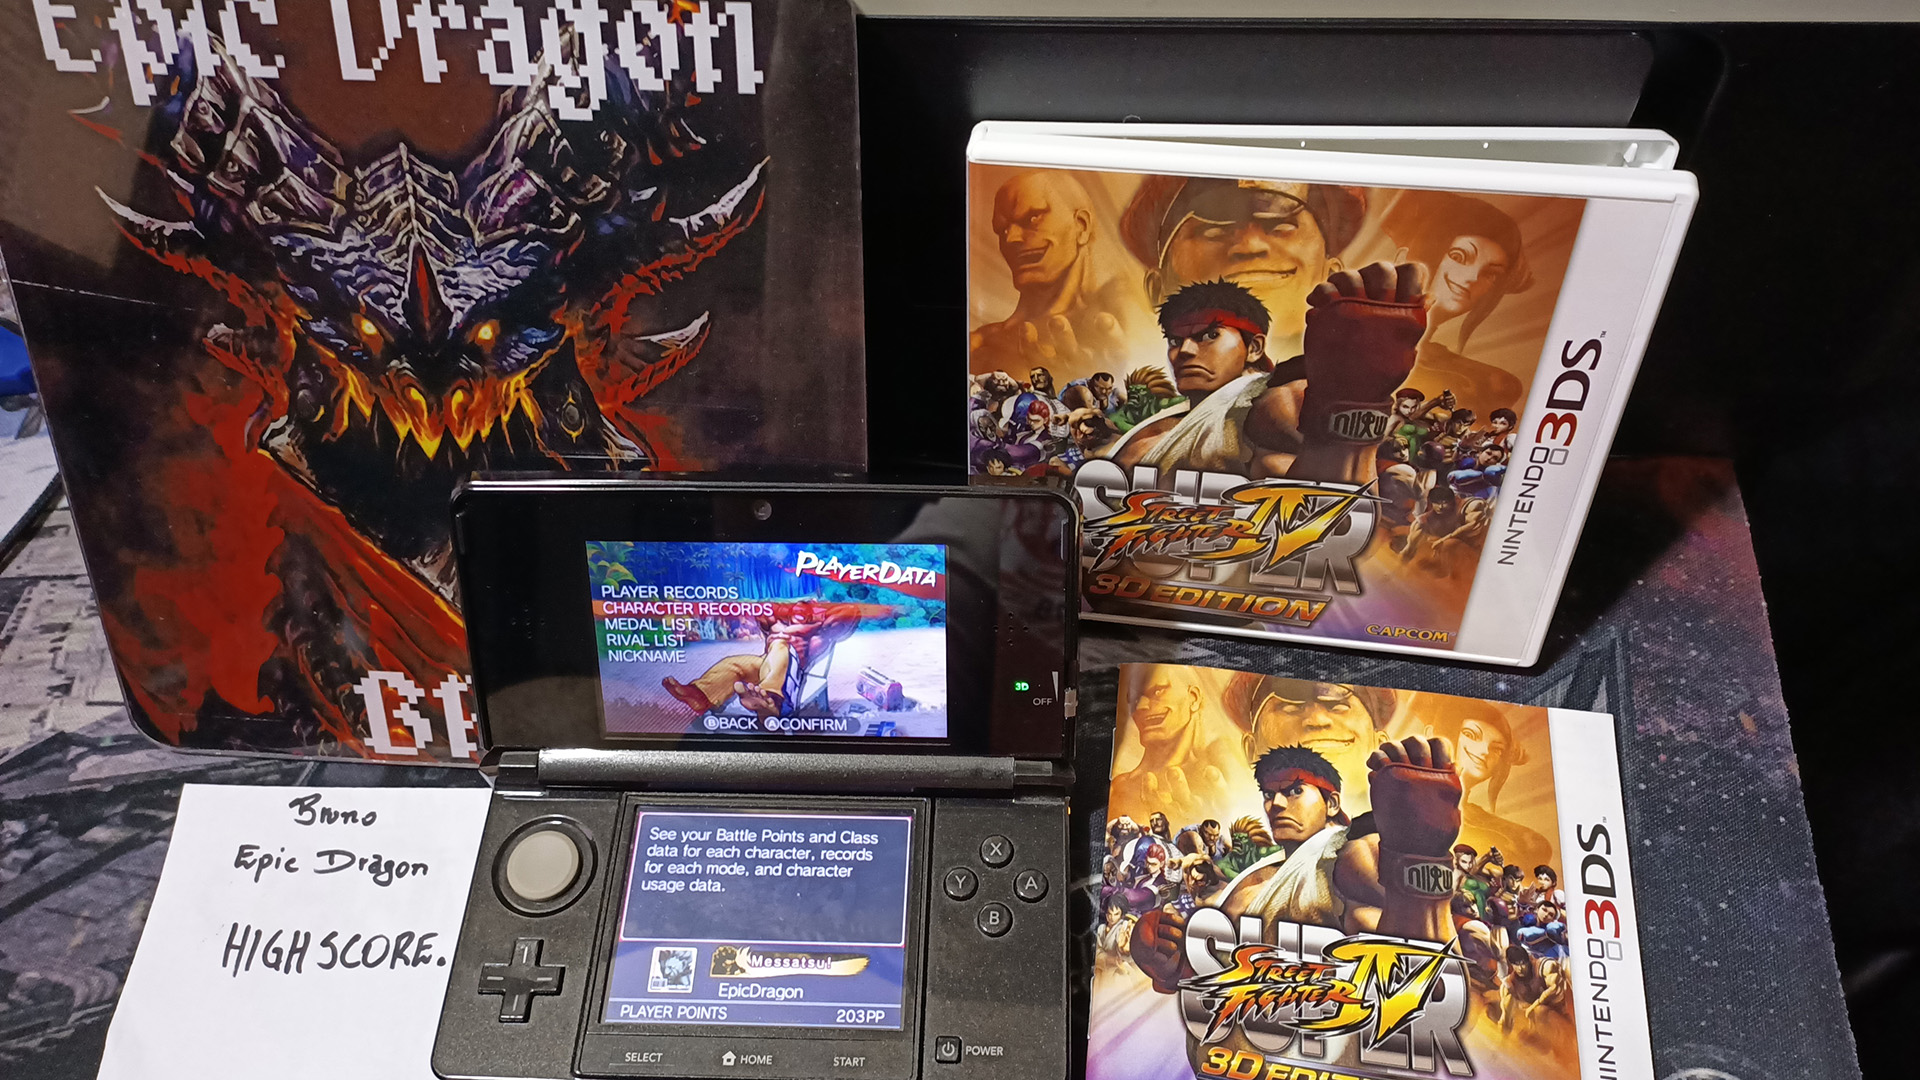 EpicDragon: Super Street Fighter IV 3D Edition: Arcade: Balrog [M. Bison in Japanese Version] (Nintendo 3DS) 195,400 points on 2022-08-01 20:50:04